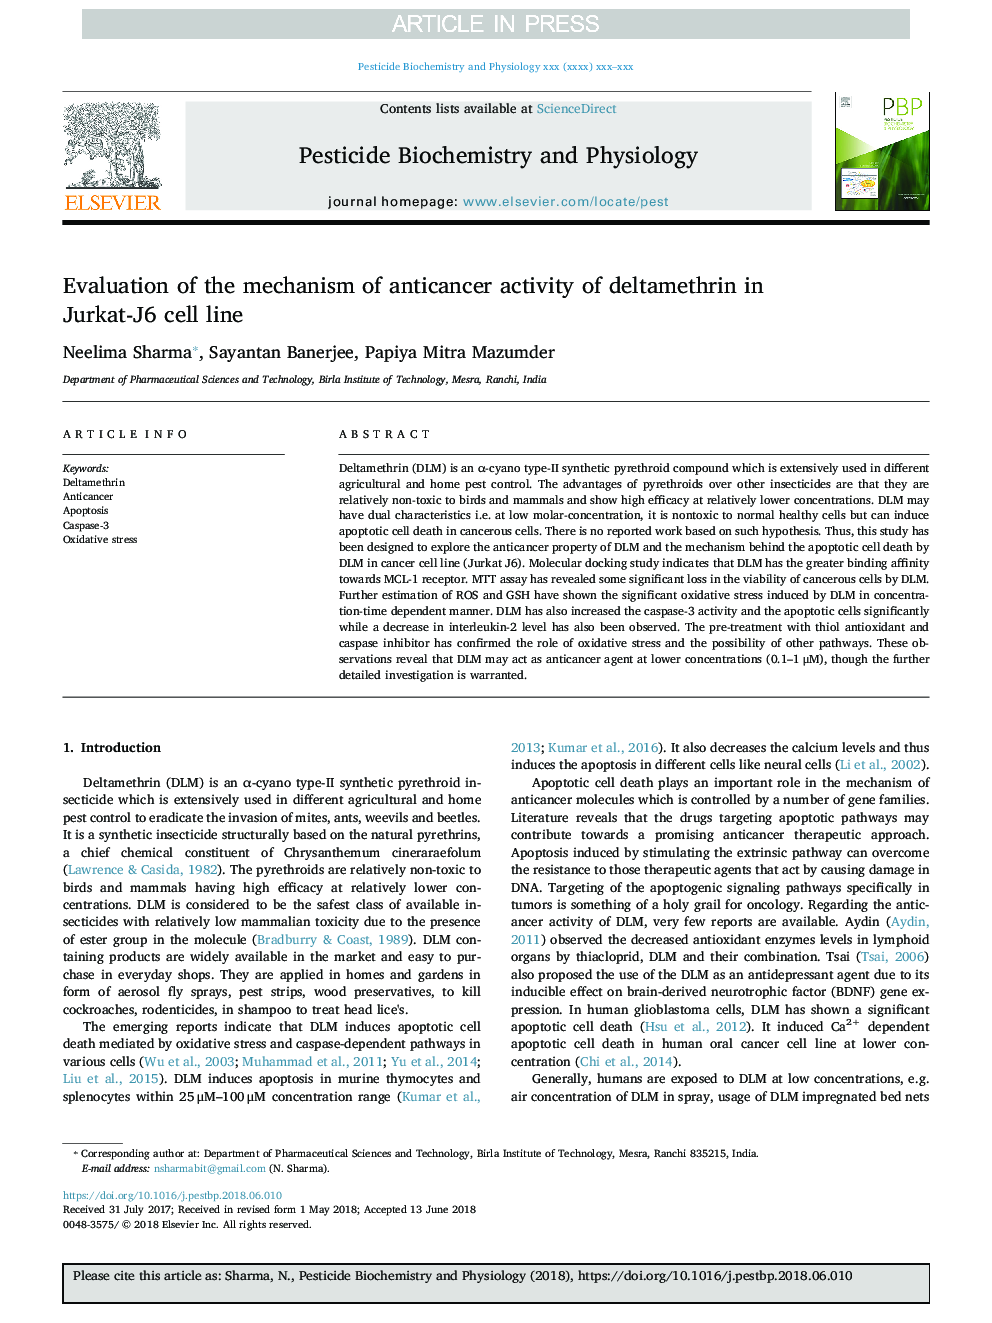 Evaluation of the mechanism of anticancer activity of deltamethrin in Jurkat-J6 cell line